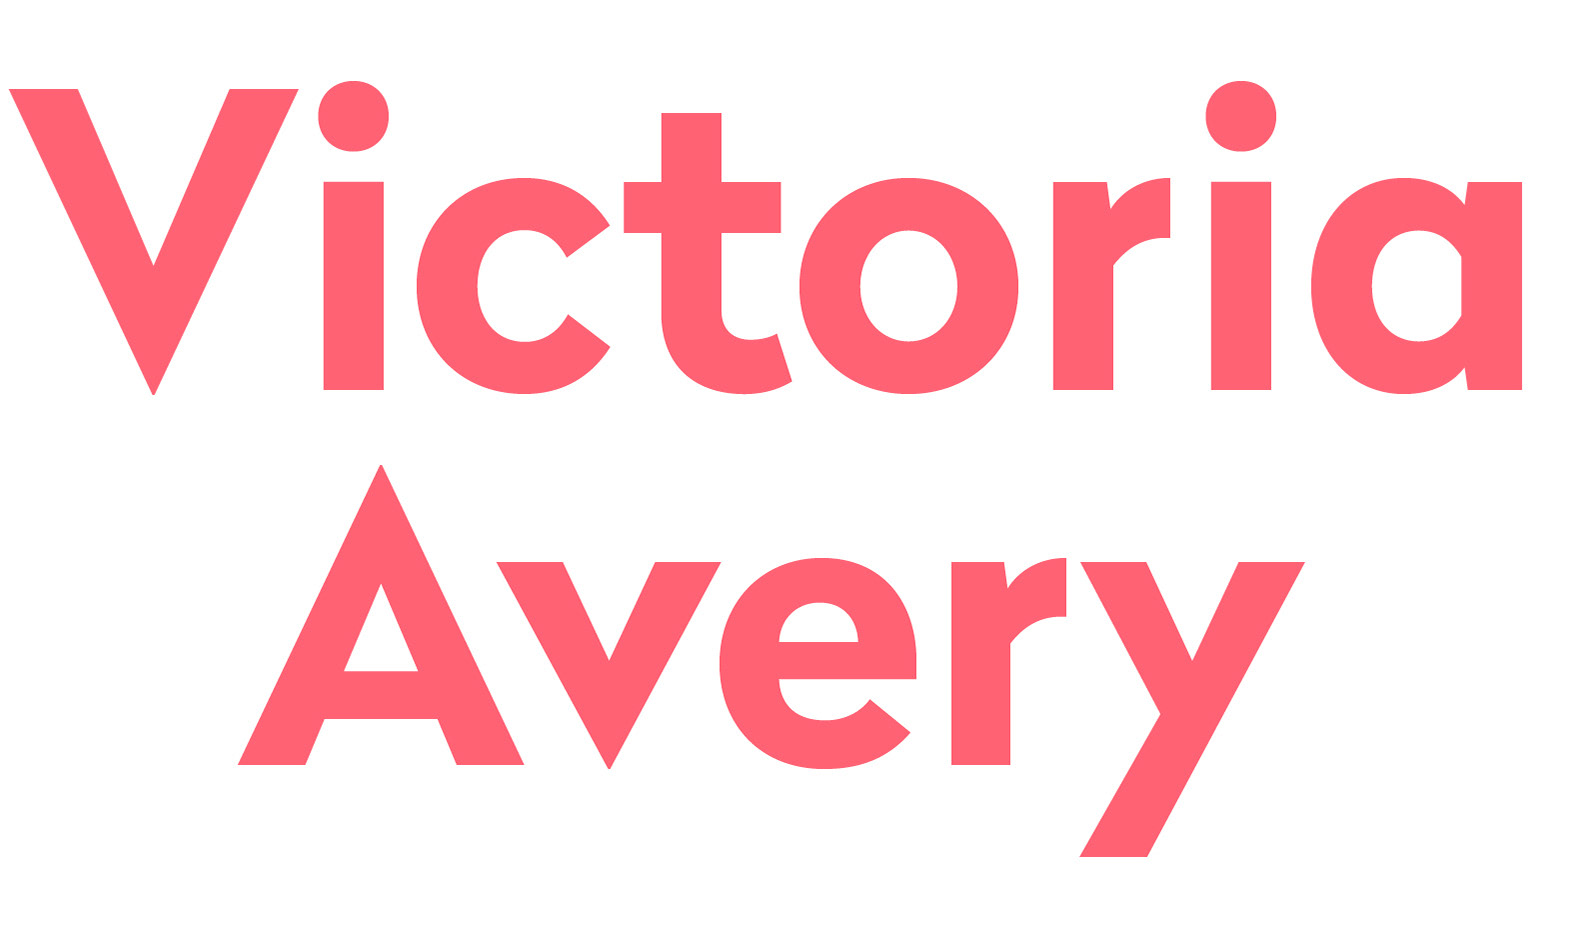 Victoria Avery